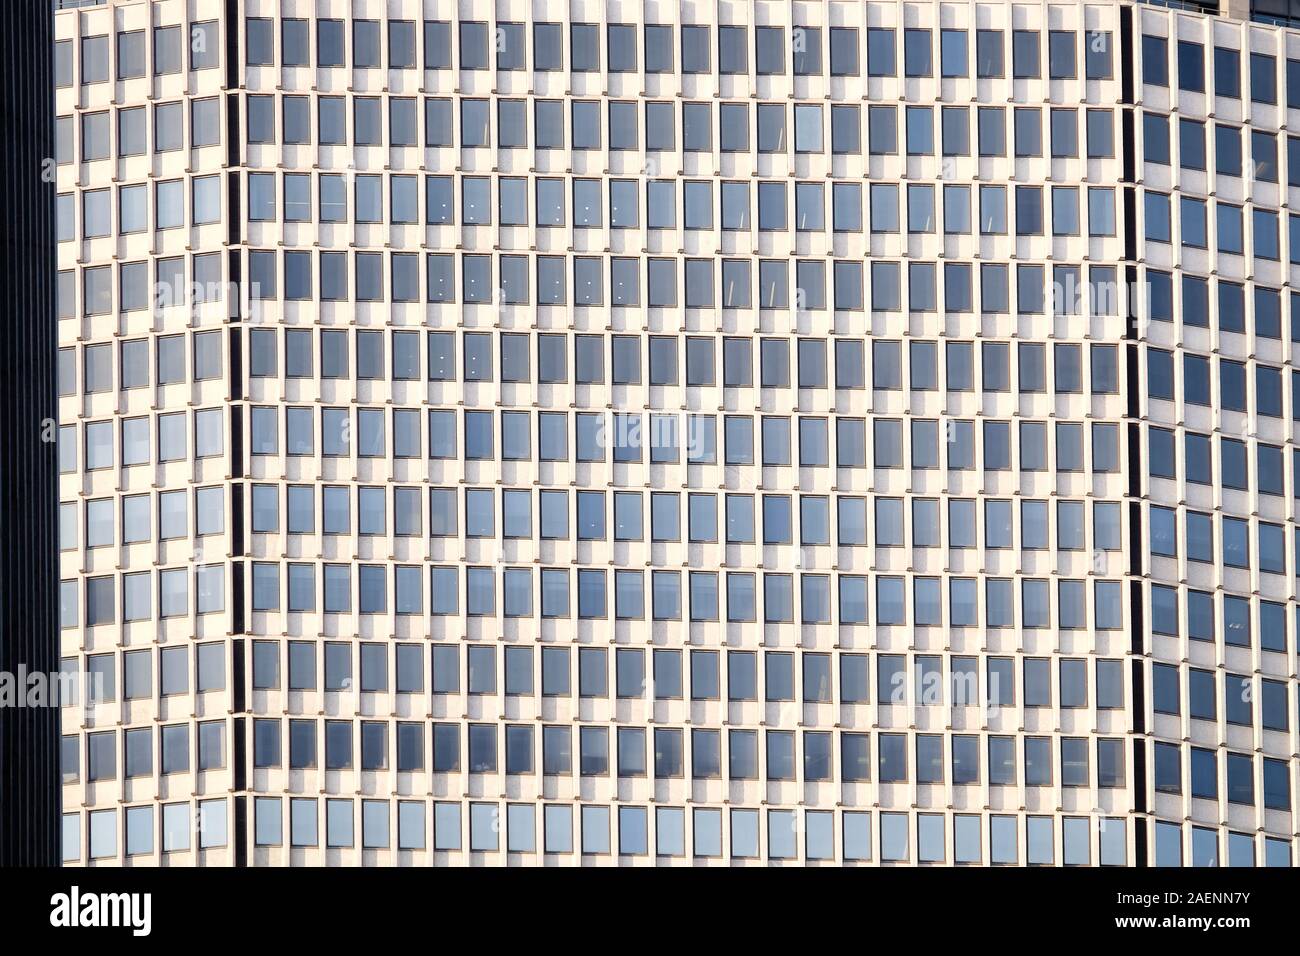 Uniform symmetrical windows of office block building Stock Photo